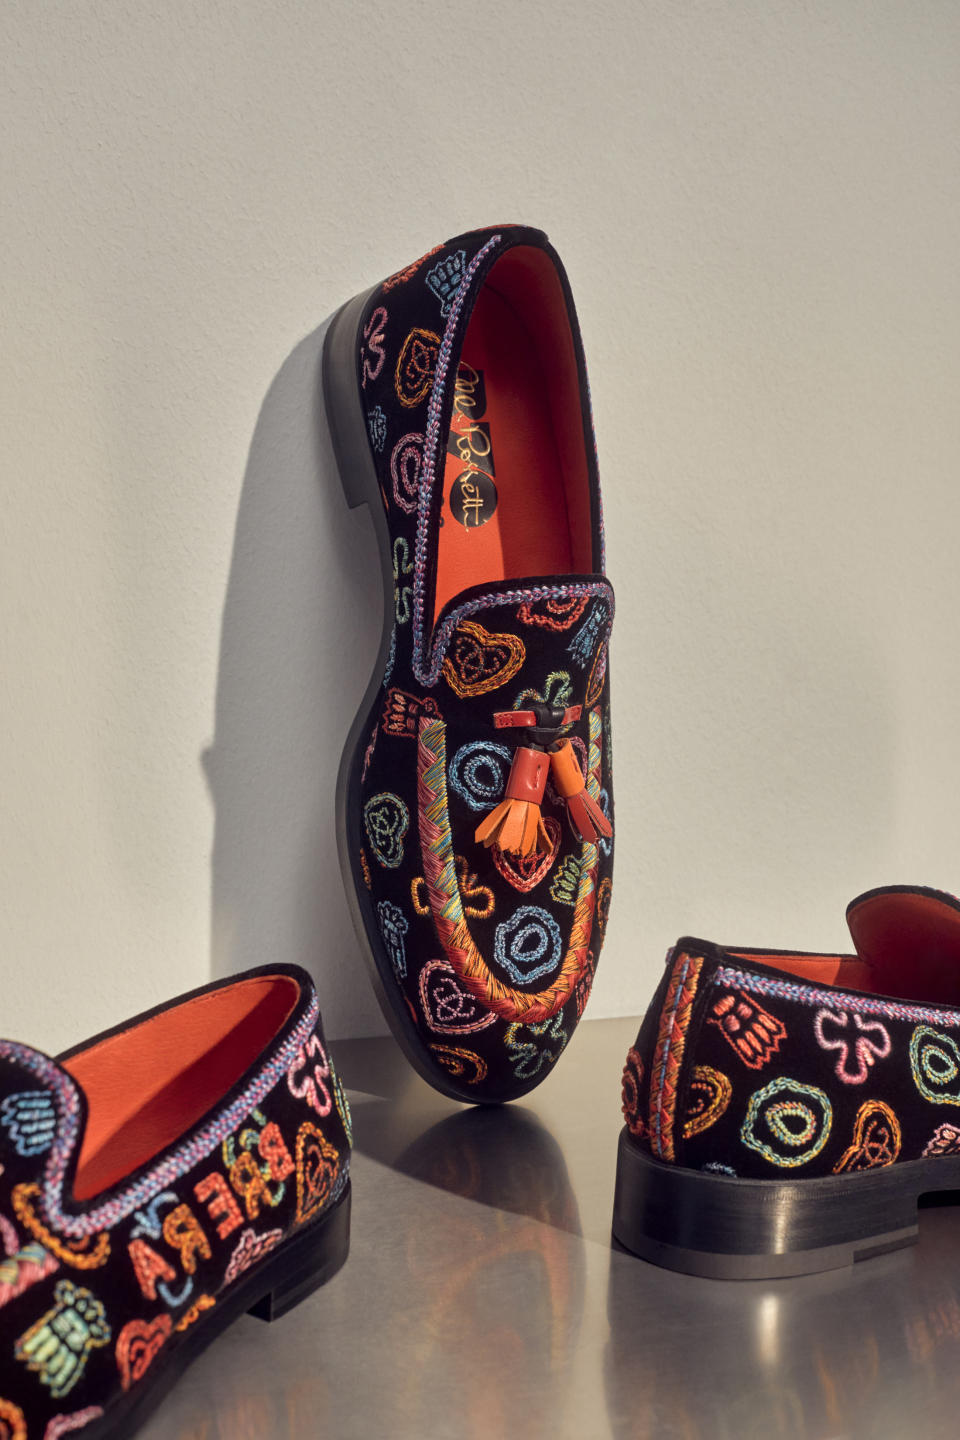 The special Brera loafer designed for Fratelli Rossetti's 70th anniversary.